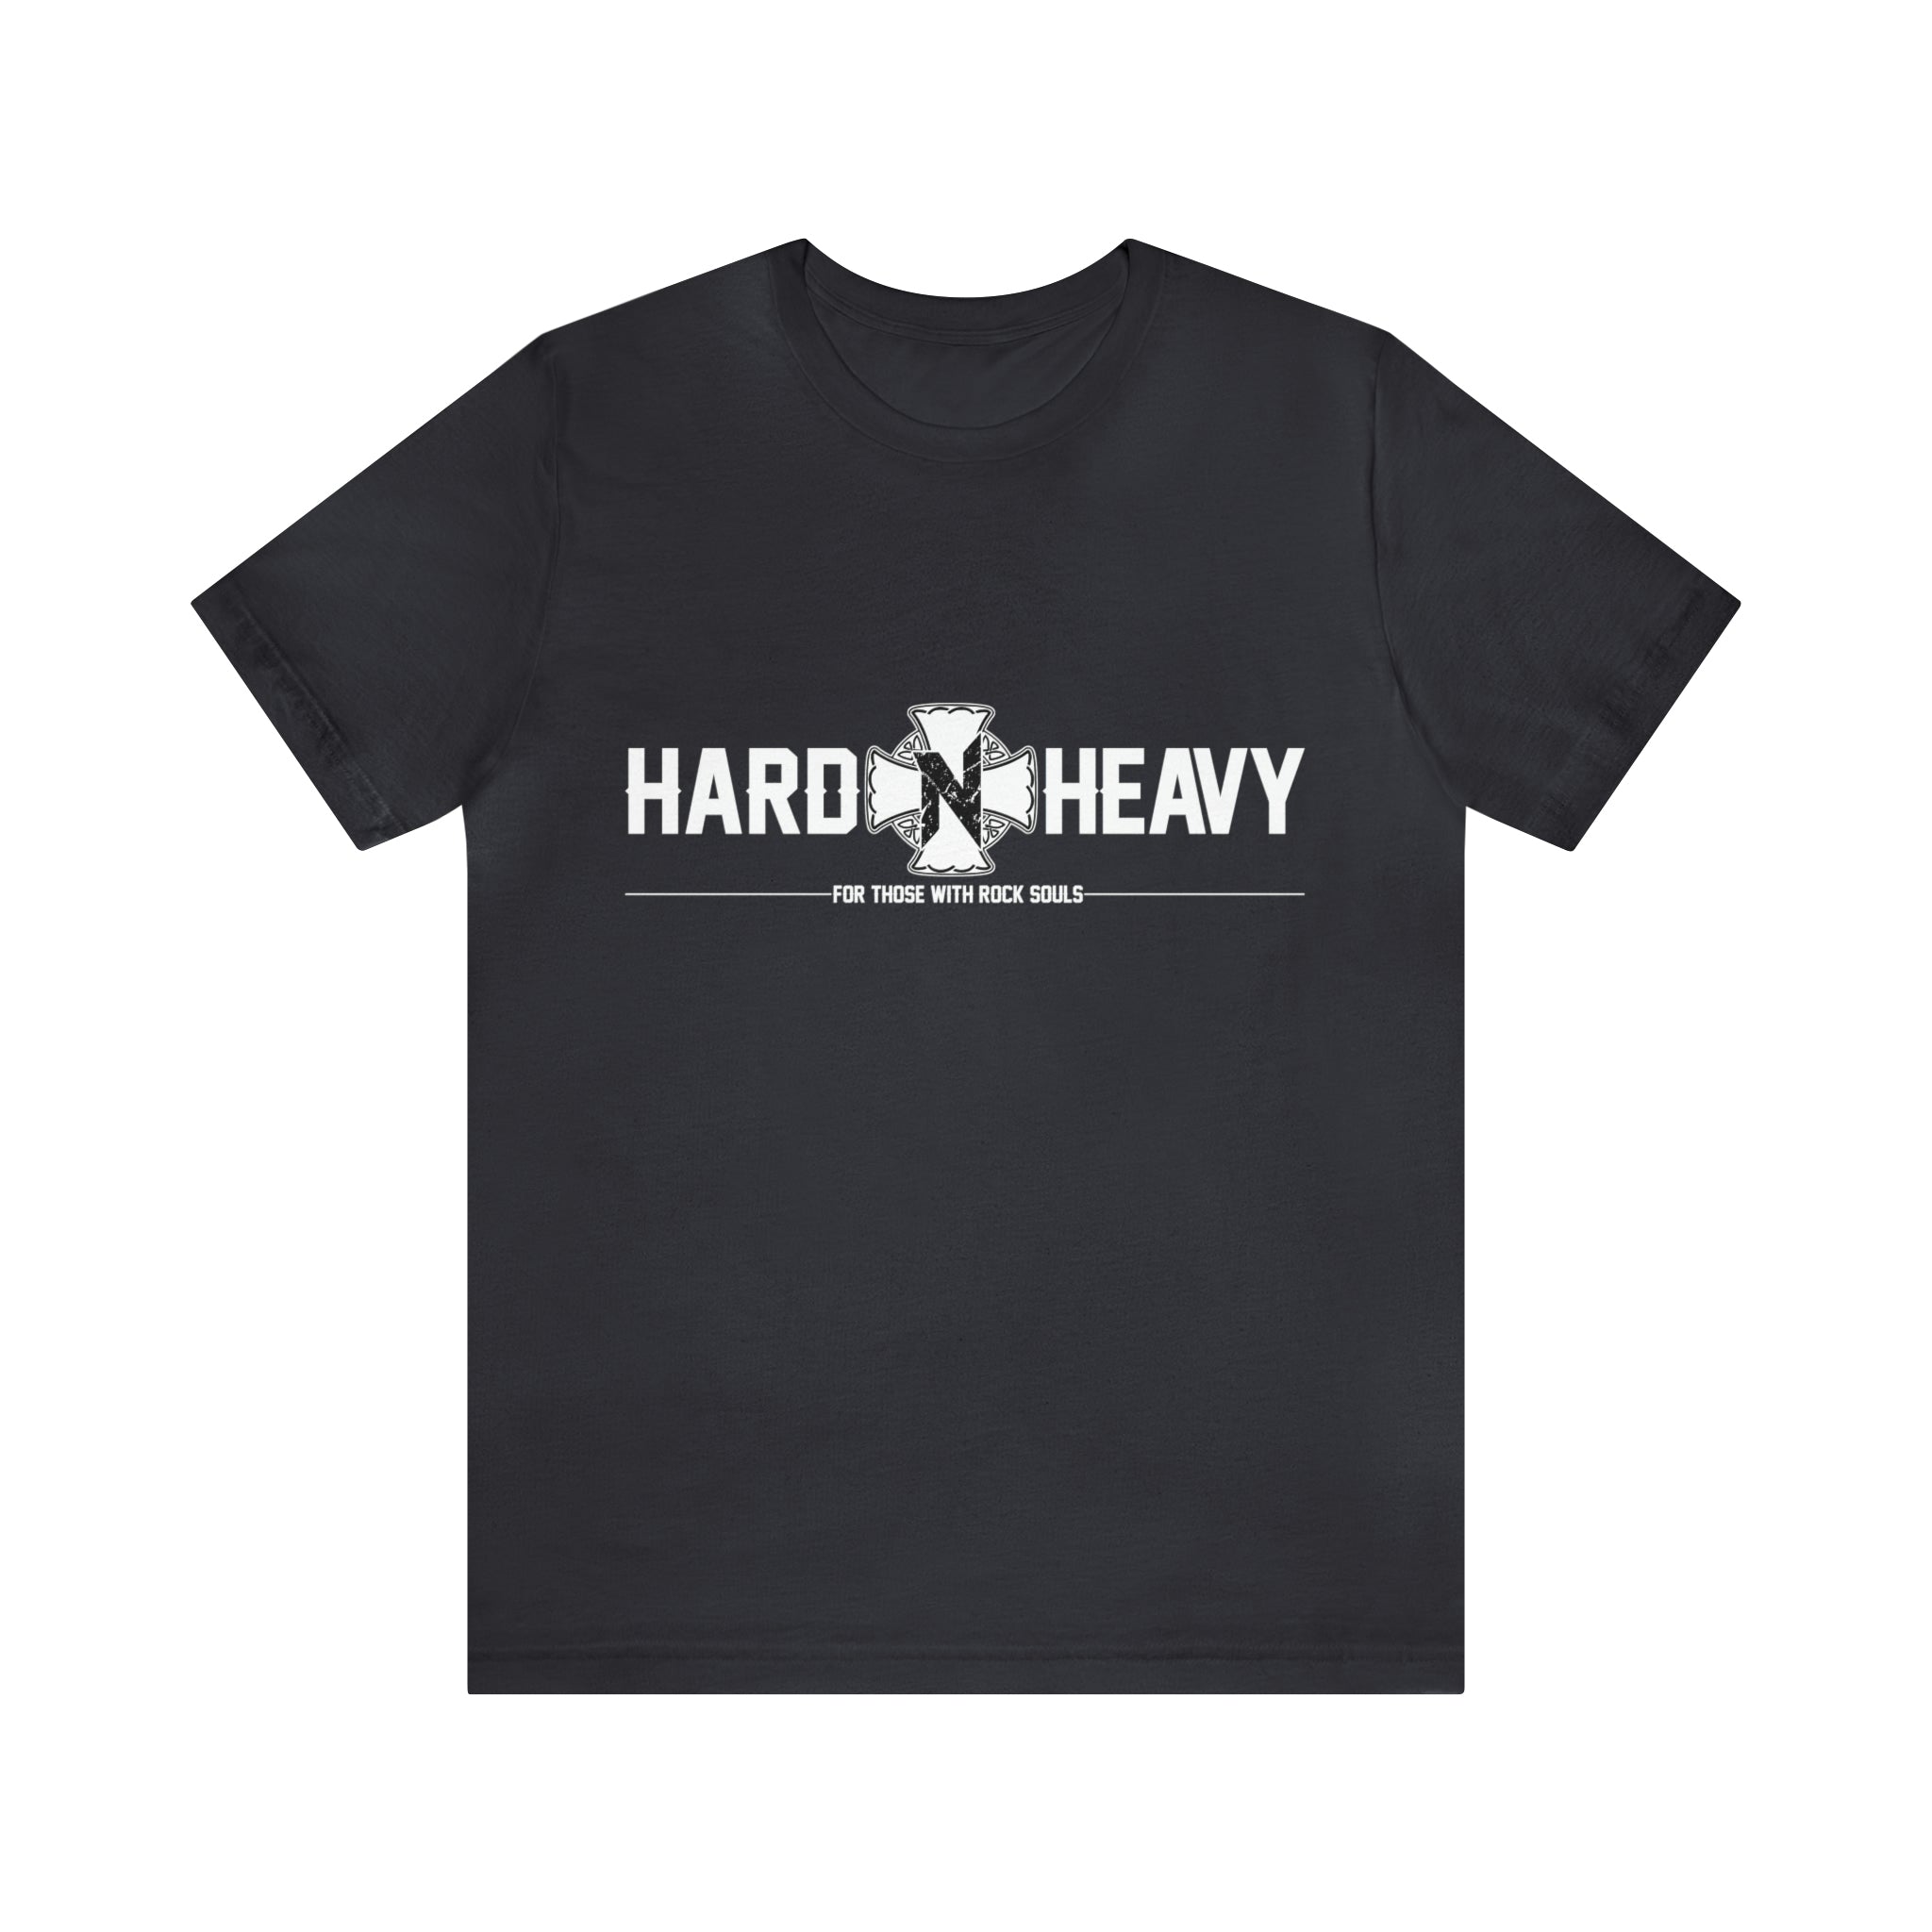 HARD'N'HEAVY Jersey Short Sleeve Tee for Men / Alternative Fashion Outfits - HARD'N'HEAVY